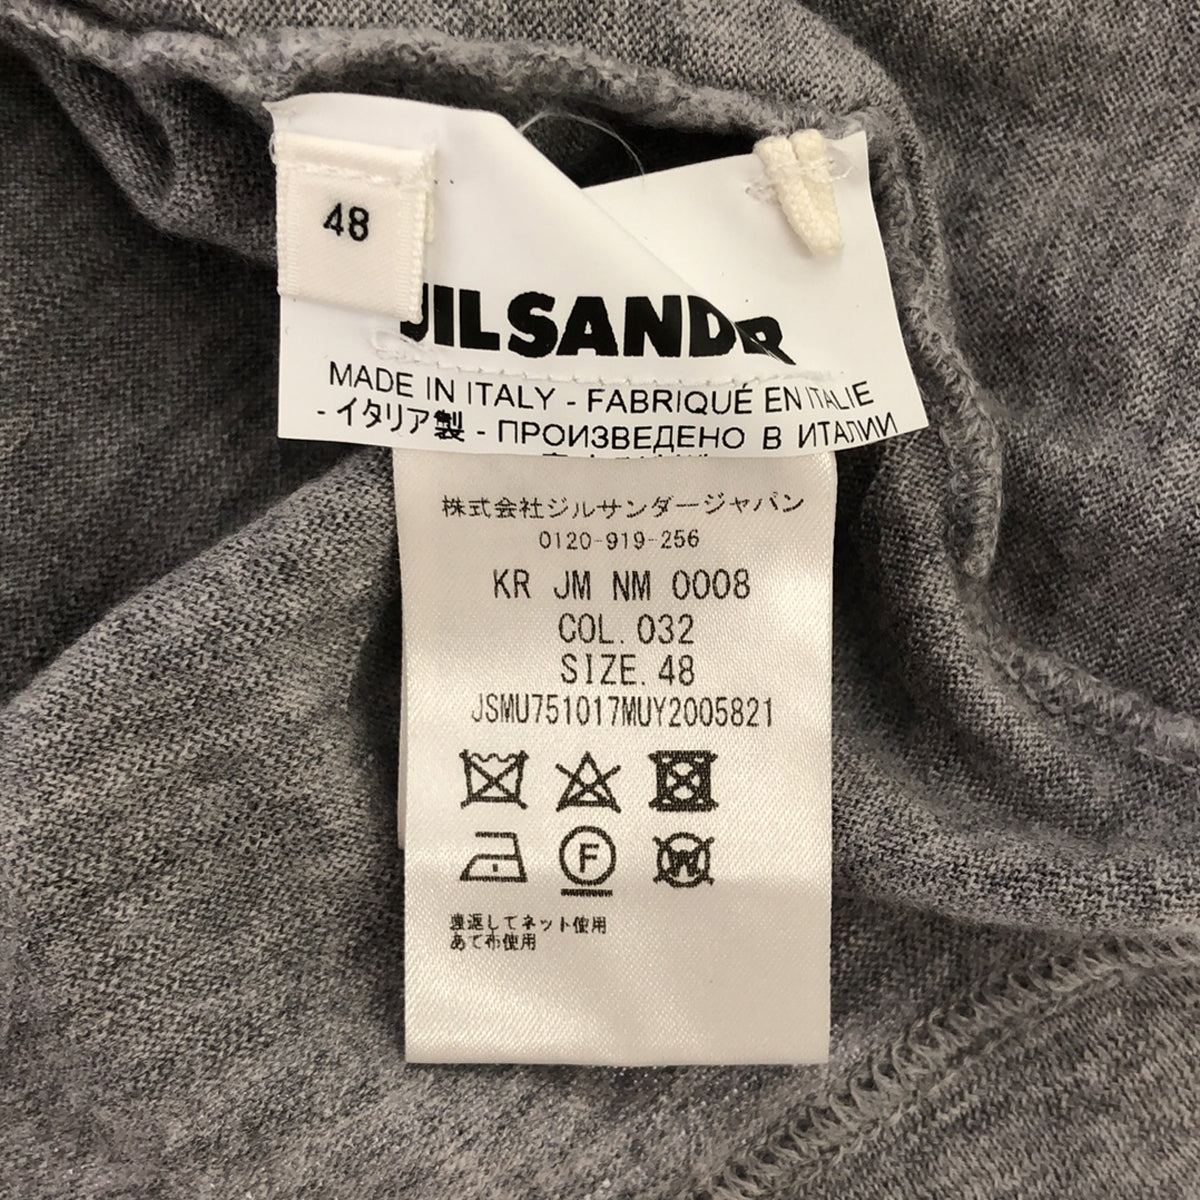 JIL SANDER / ジルサンダー | ハイネック サマーニット プルオーバー カットソー Tシャツ | 48 | メンズ